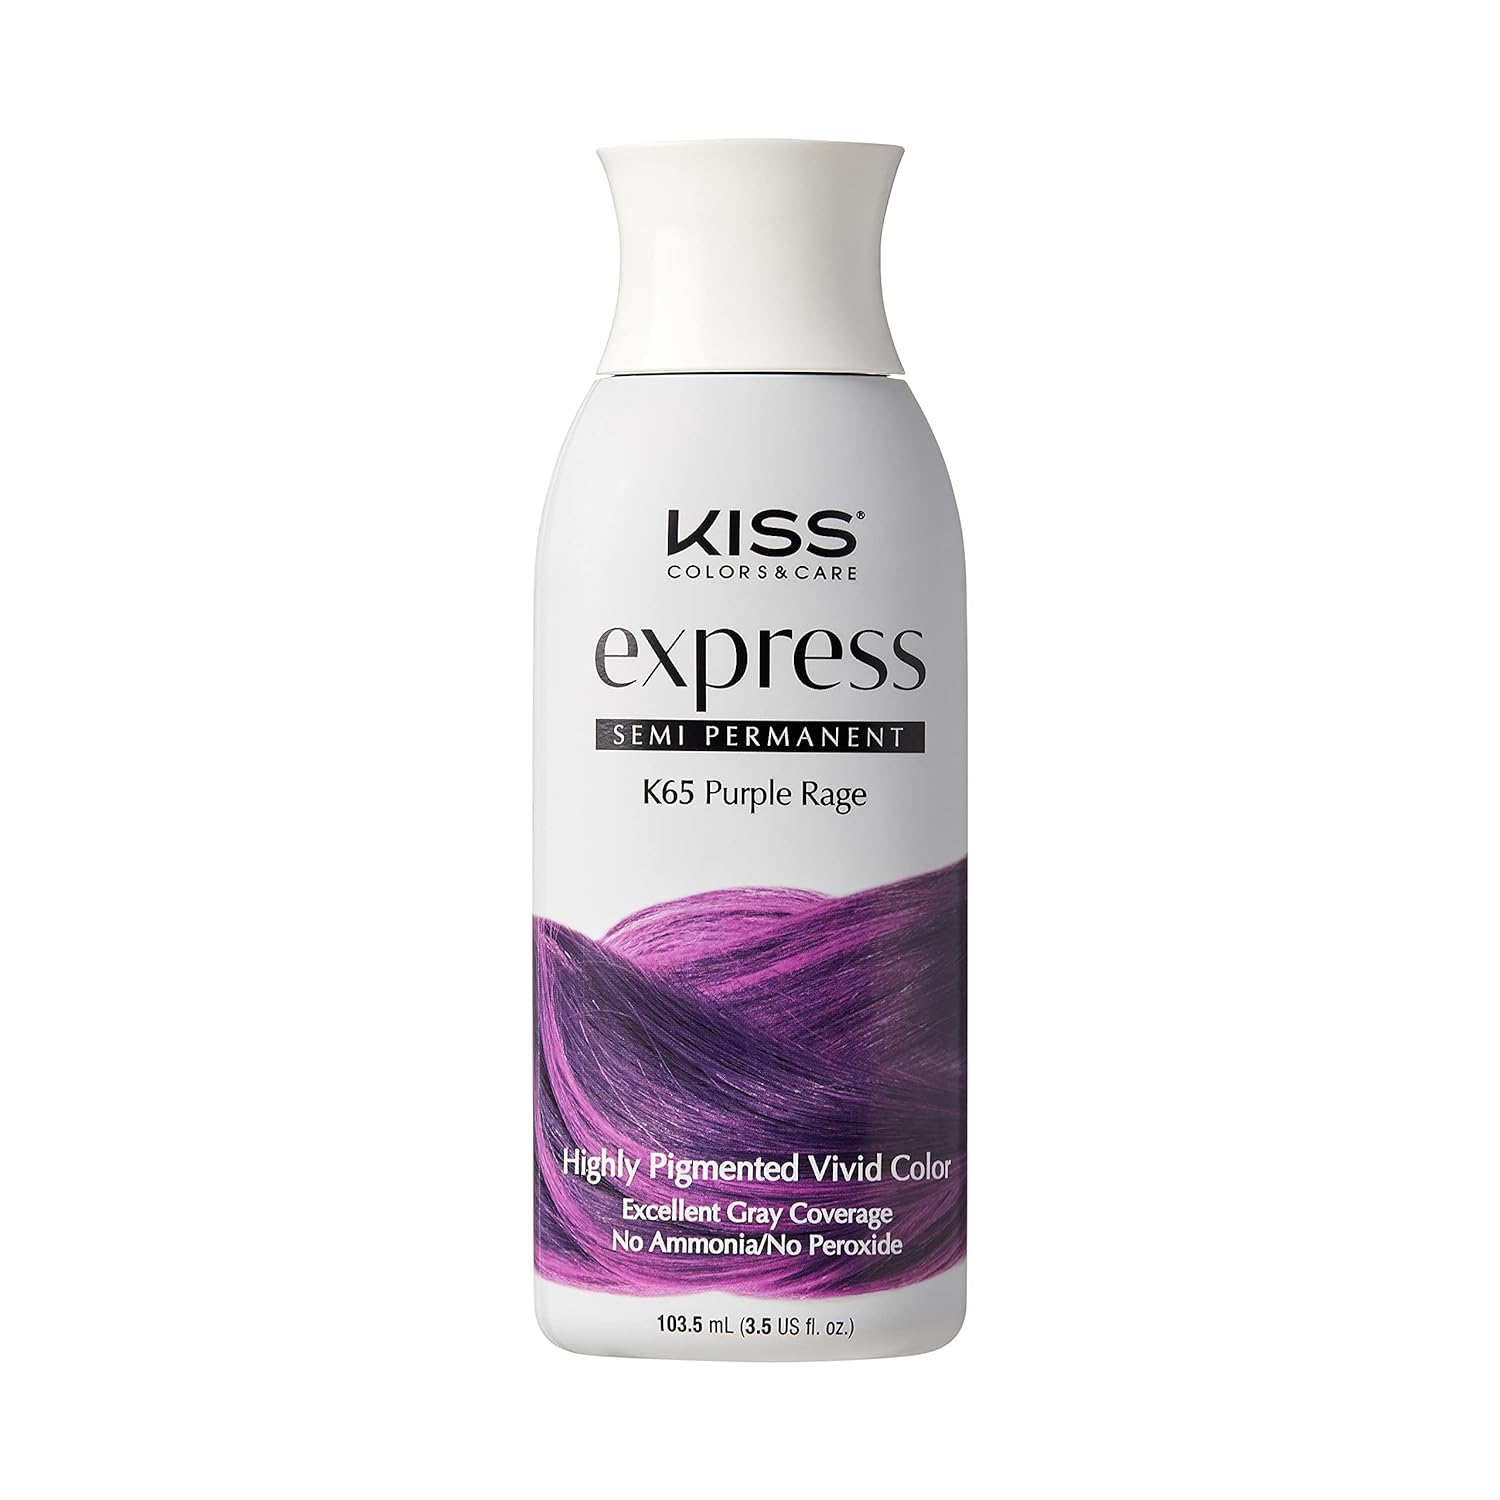 Kiss Express Semi-Permanent Hair Color - Purple Rage, 3.5 Oz (K65)